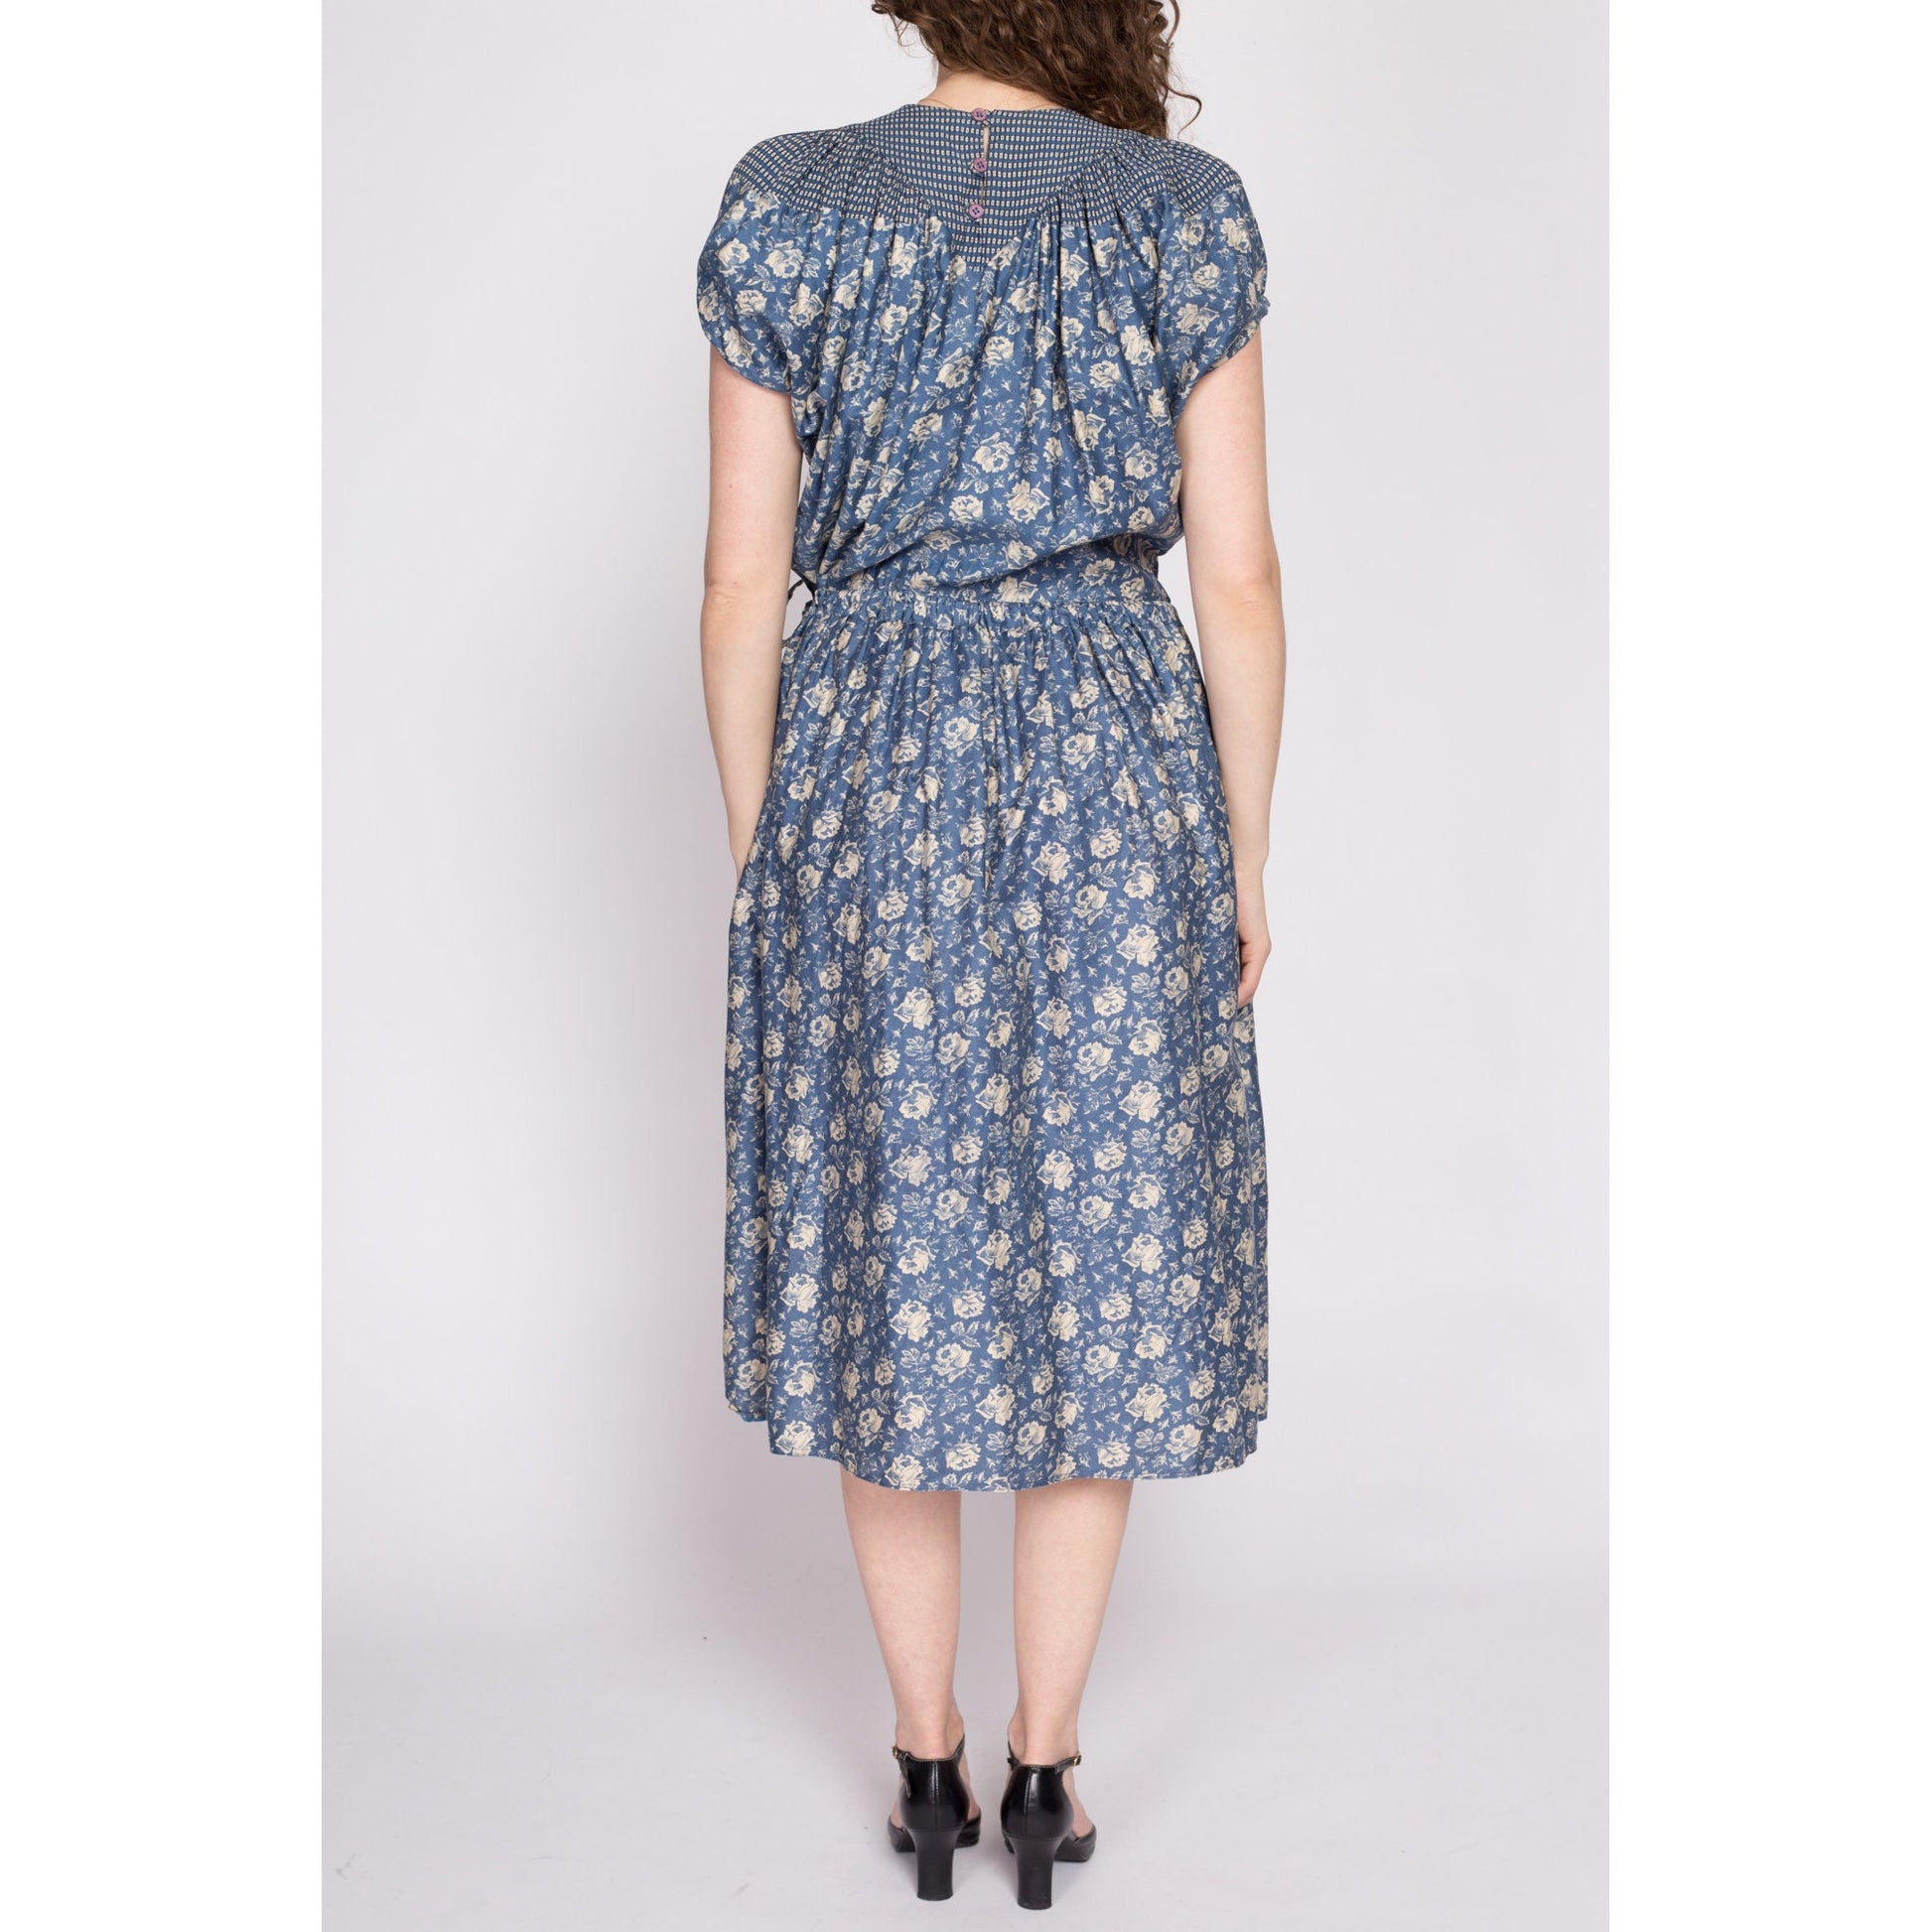 80s Anastasia Paris Blue Floral Prairie Dress - Small to Large | Boho Vintage Puff Sleeve Oversize Blouson Midi Dress